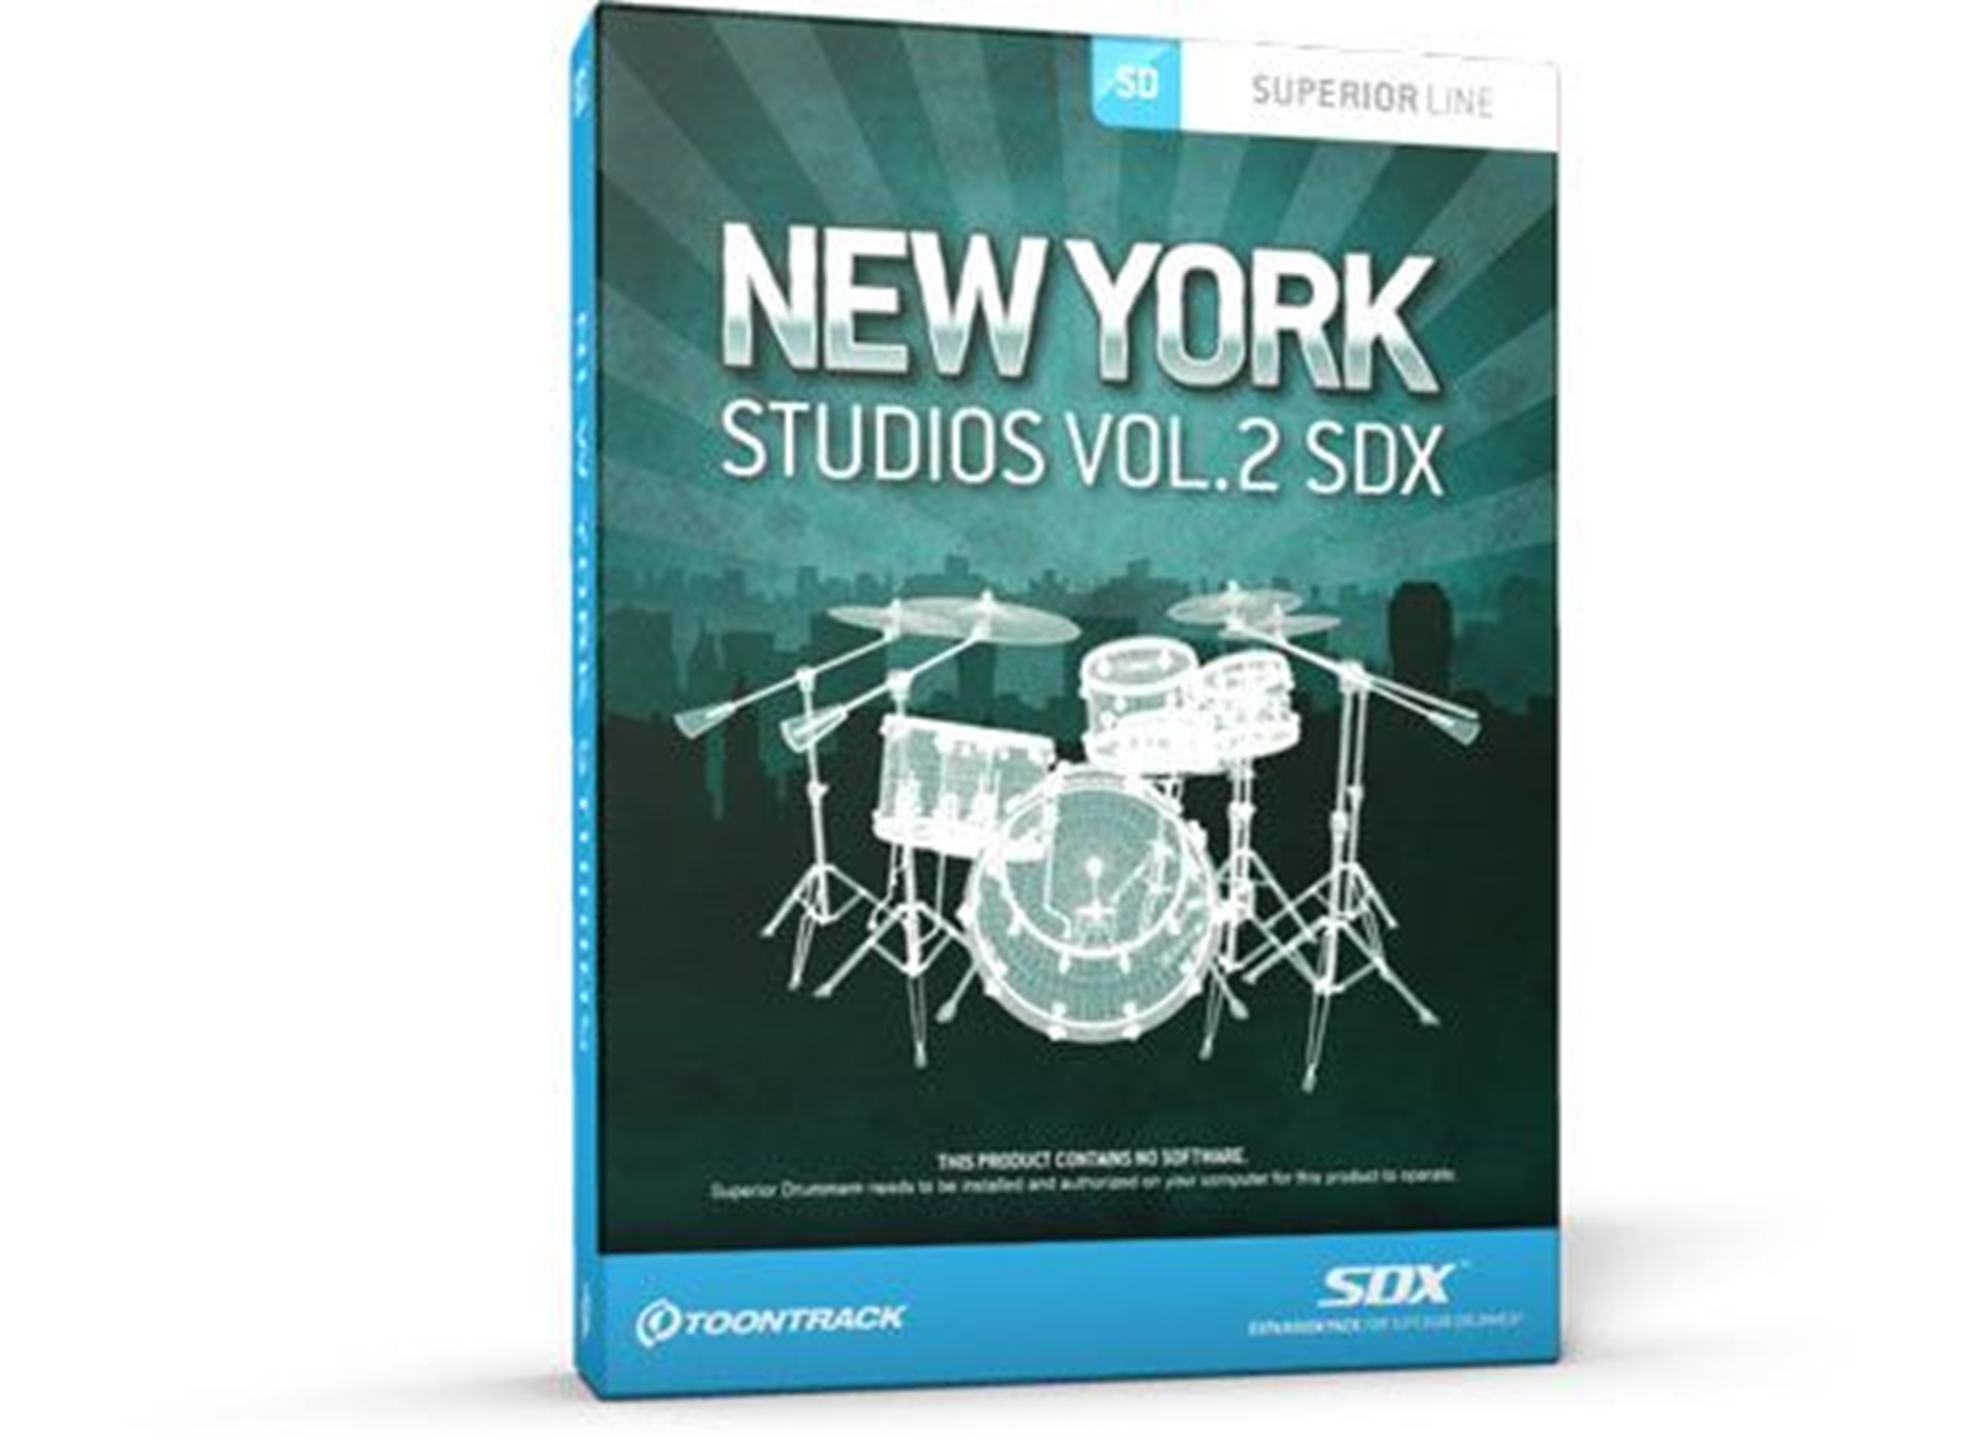 New York Studios Vol. 2 SDX